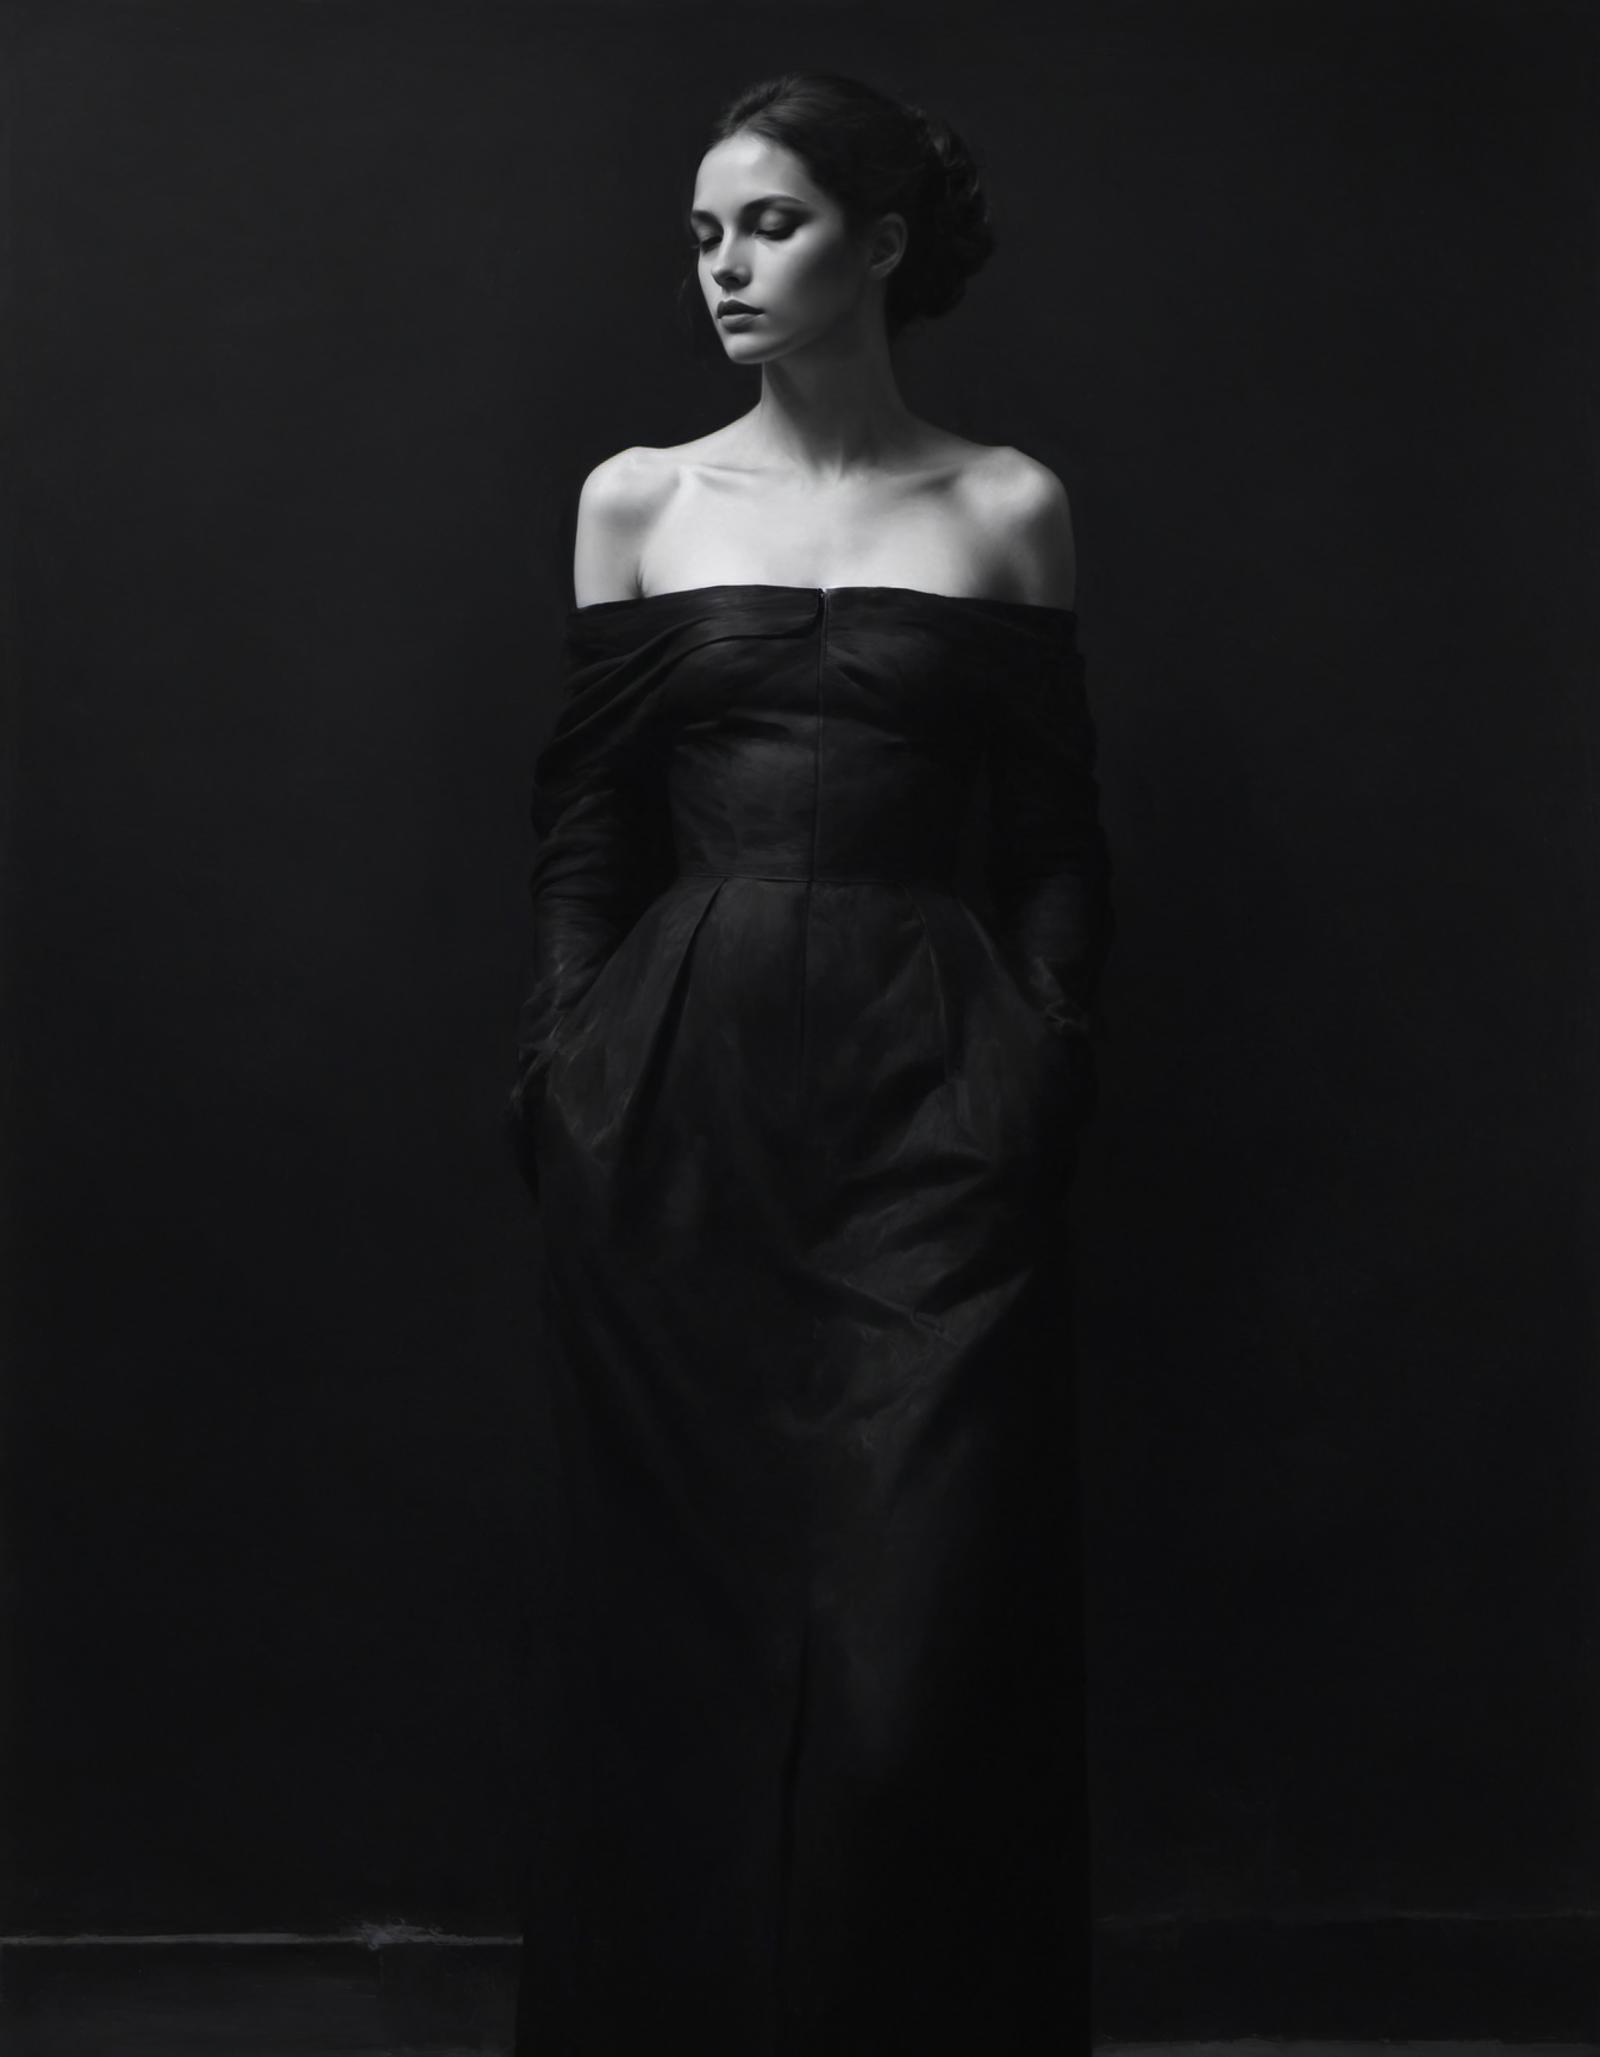 A woman wearing a black dress posing for a portrait.